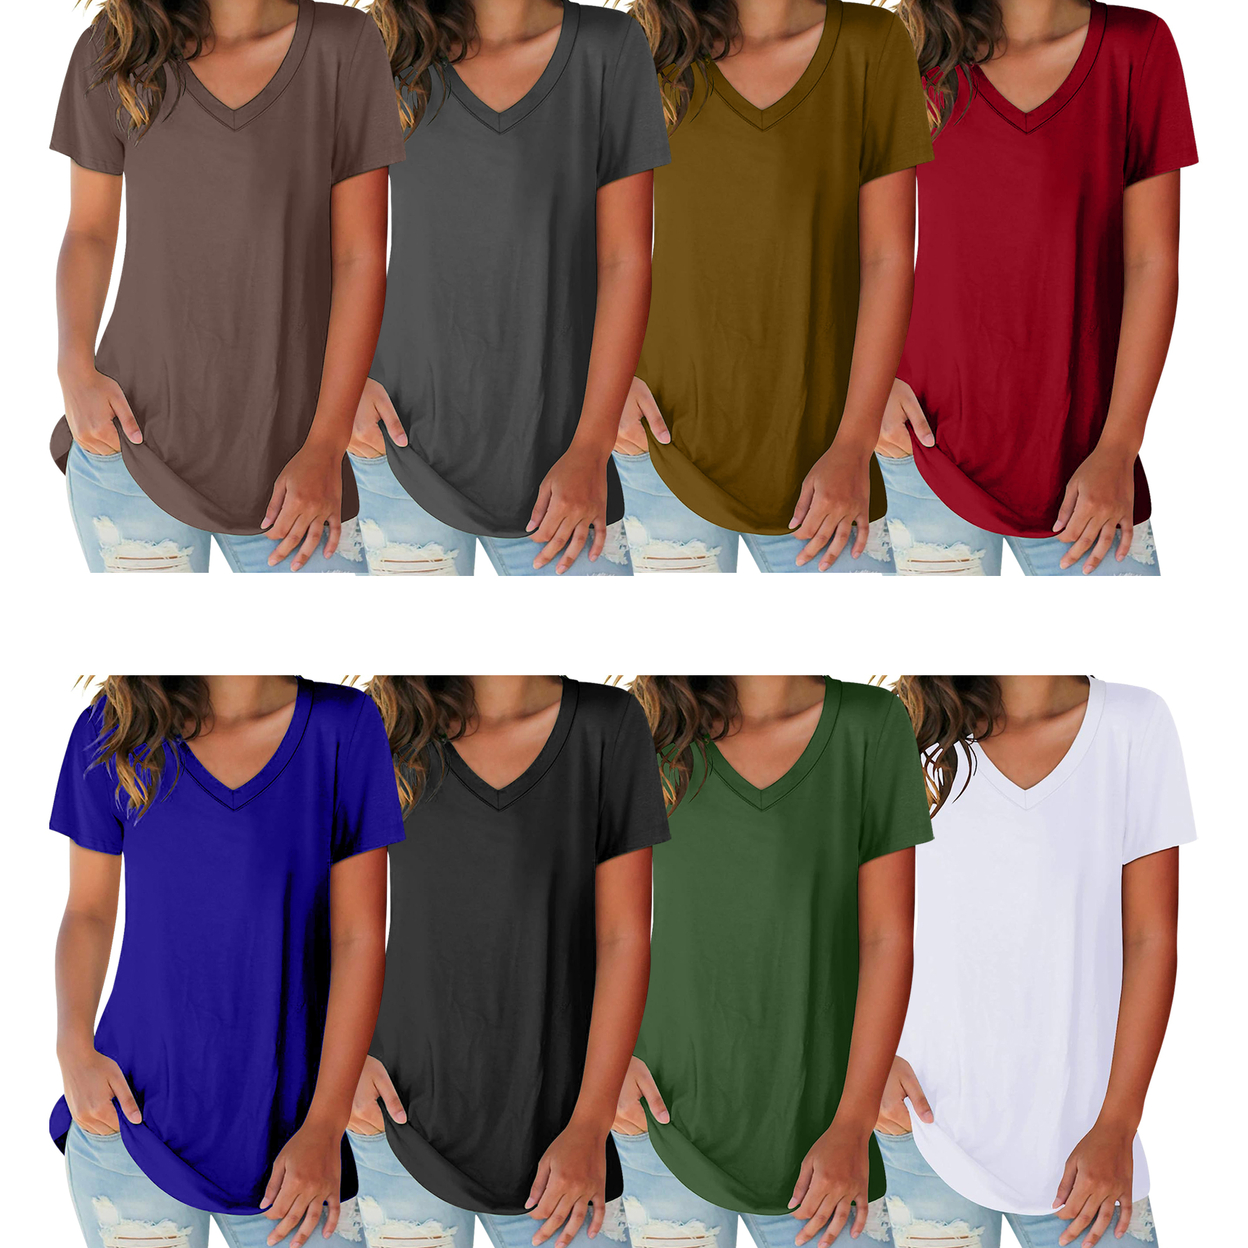 2-Pack: Women's Ultra Soft Smooth Cotton Blend Basic V-Neck Short Sleeve Shirts - White & Red, Xx-large